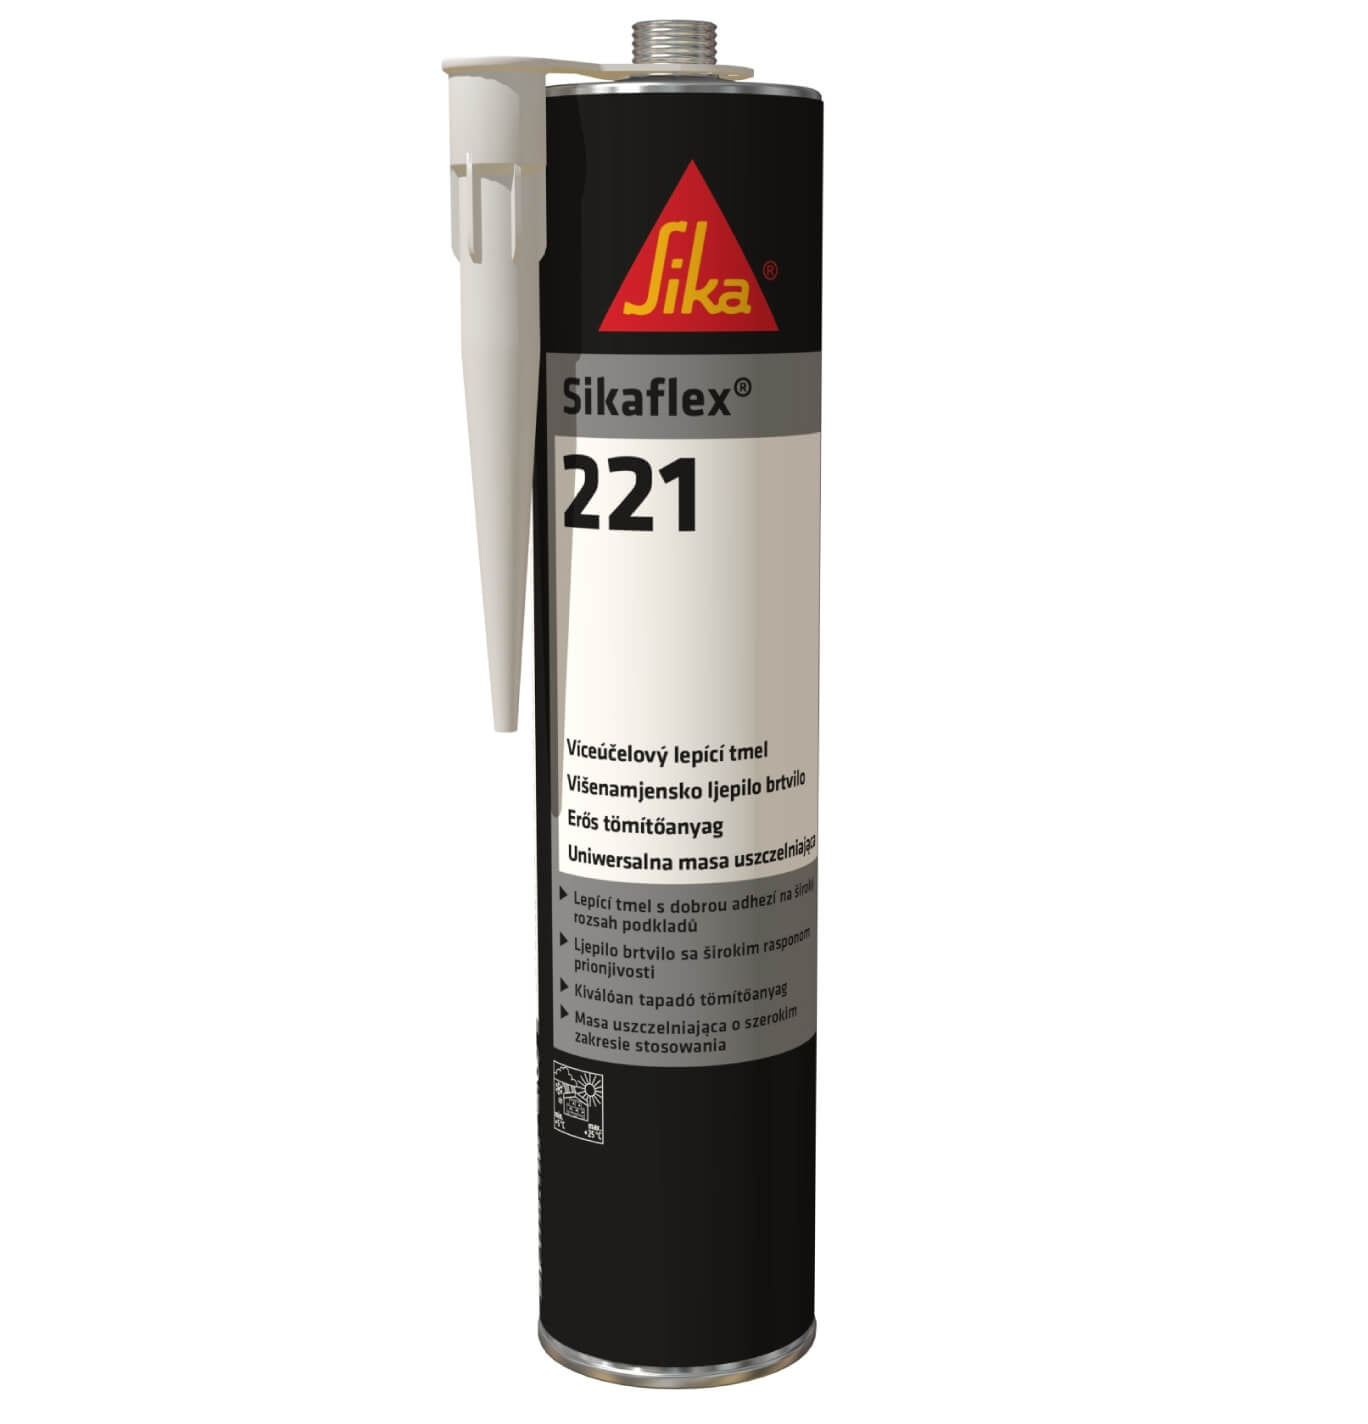 Sikaflex 221 Black Multi Purpose Adhesive Sealant & Aktivator 205 Bundle